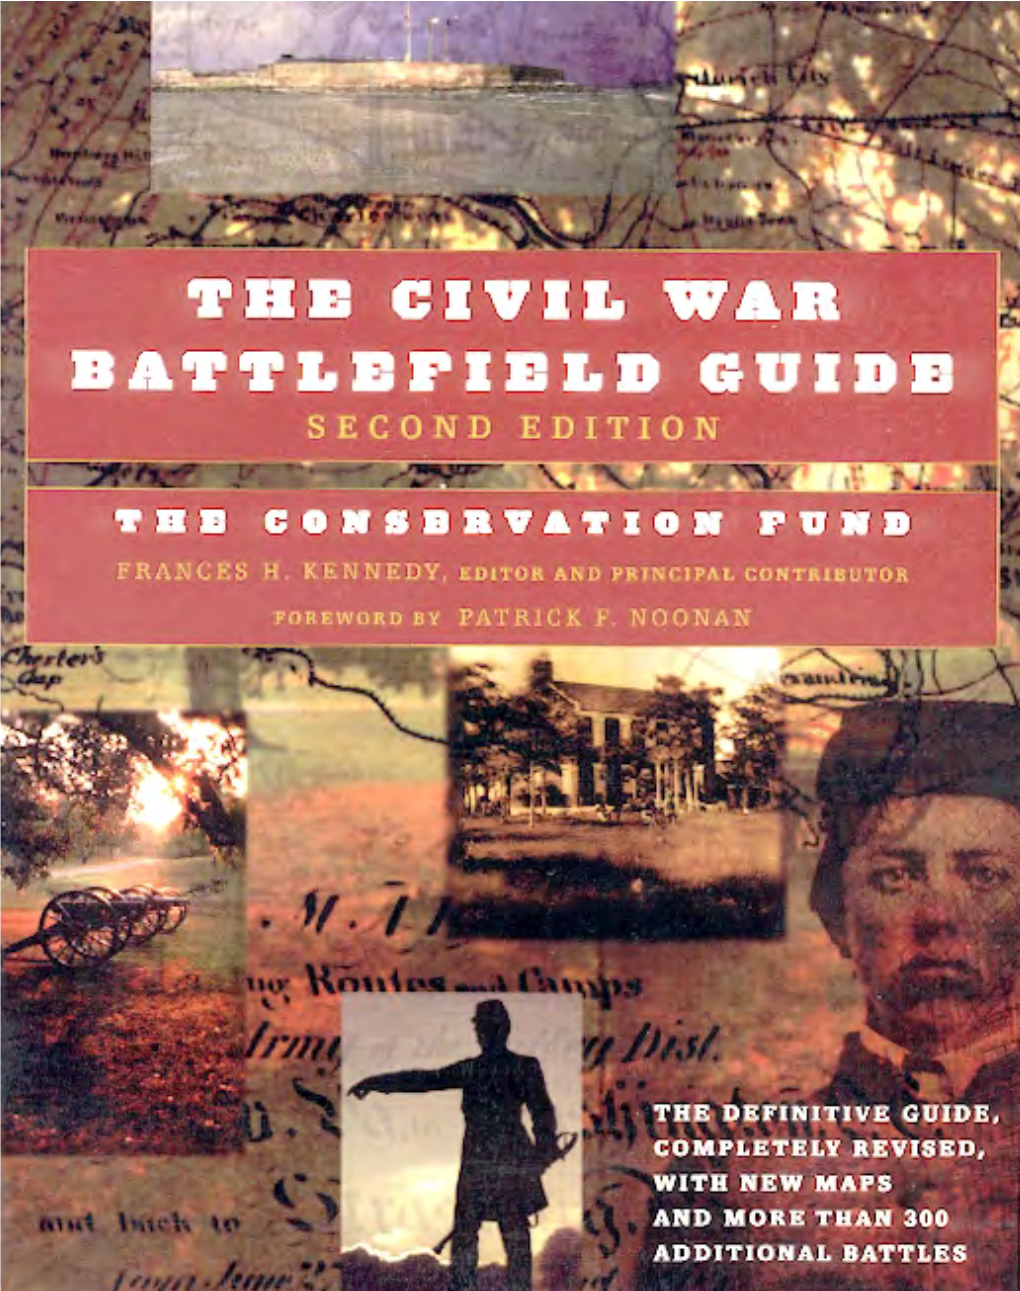 The Civil War Battlefield Guide Second Edition